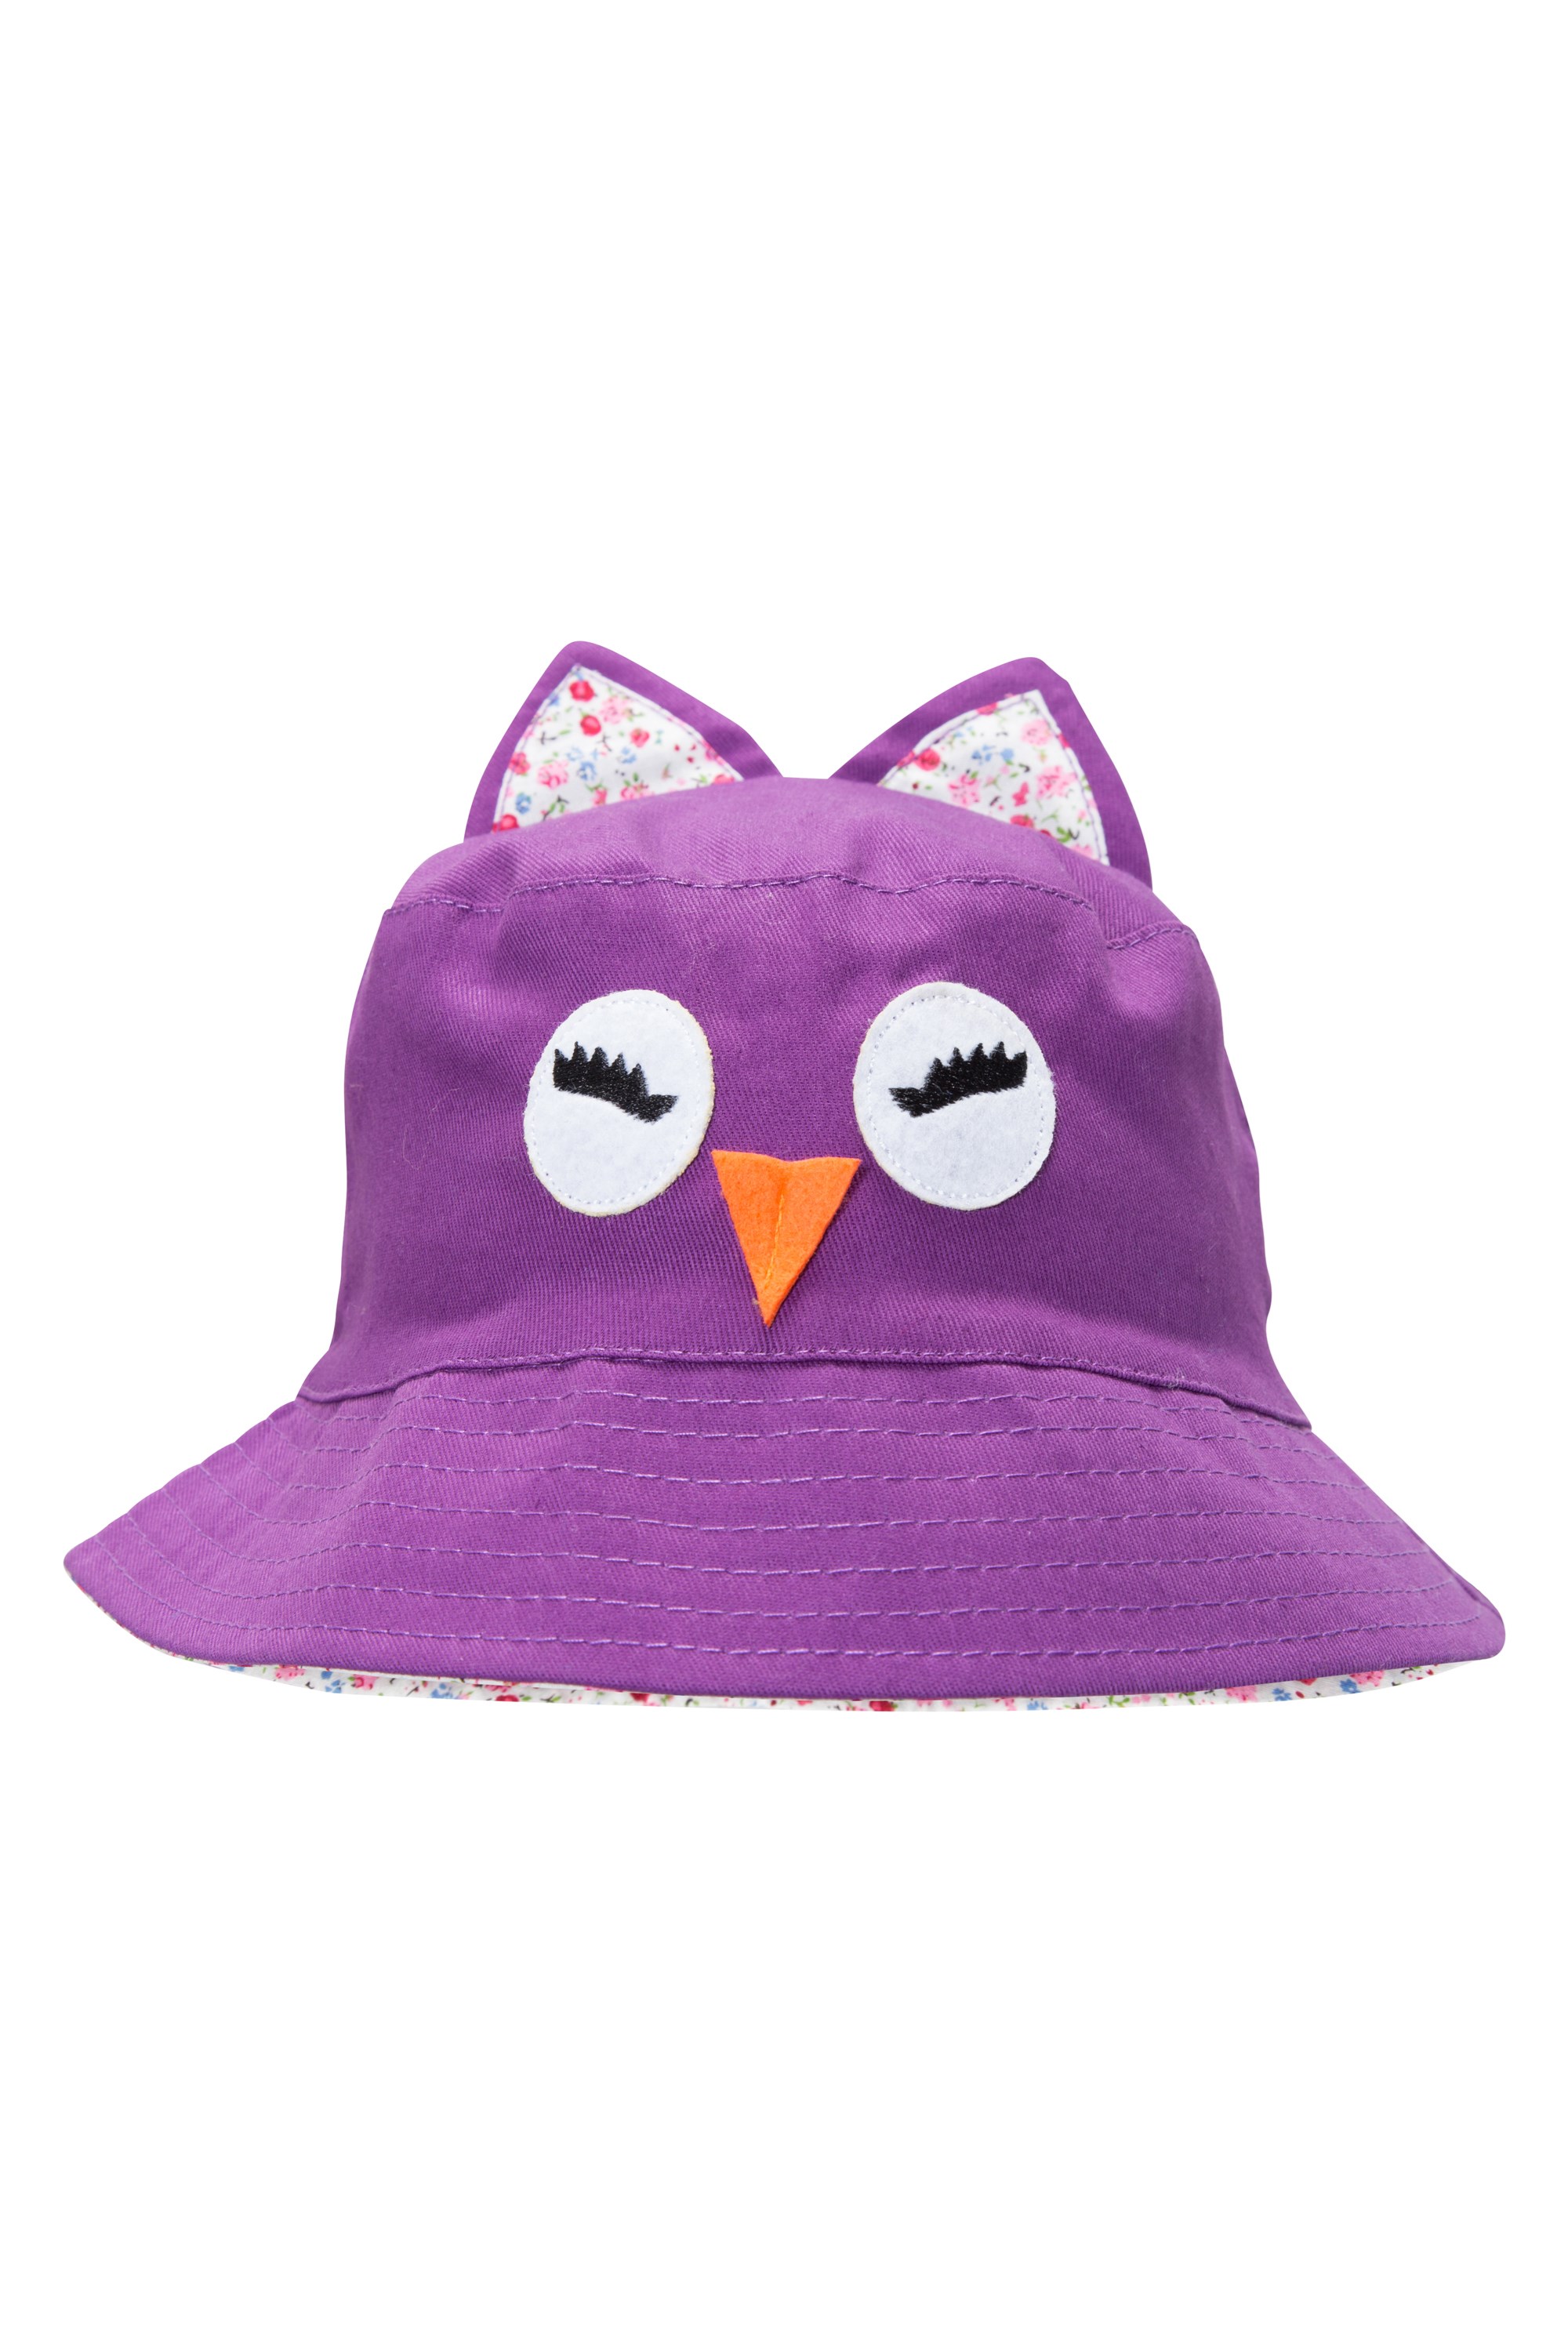 Mountain Warehouse 100% Cotton  Kids Bucket Wide Brim Hat w/ Fabric Pink  S/M 